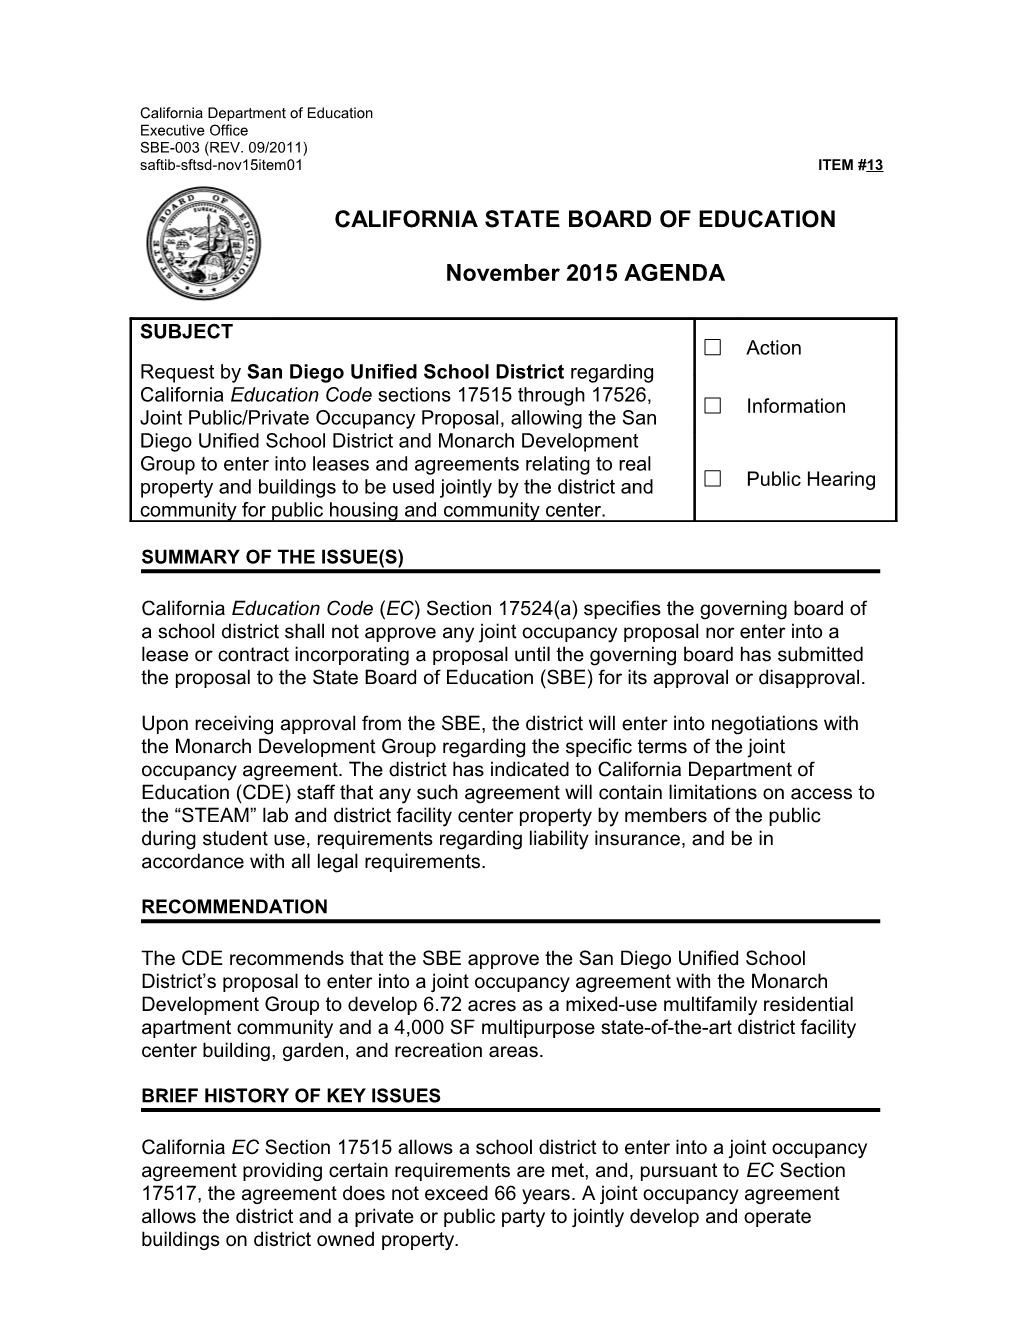 November 2015 Agenda Item 13 - Meeting Agendas (CA State Board of Education)